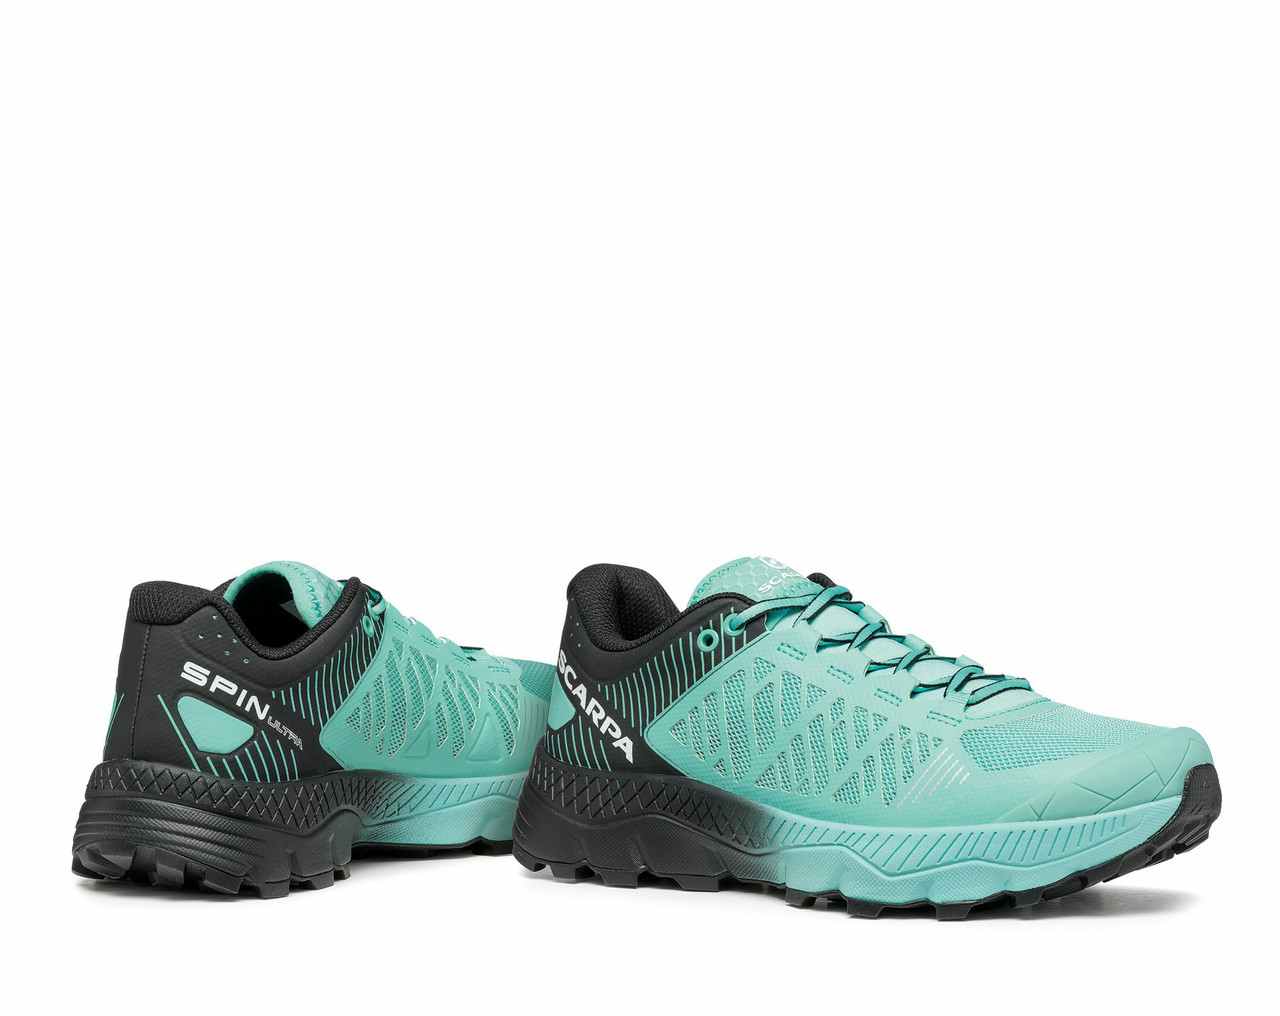 Spin Ultra Trail Running Shoes Aruba Blue/Black